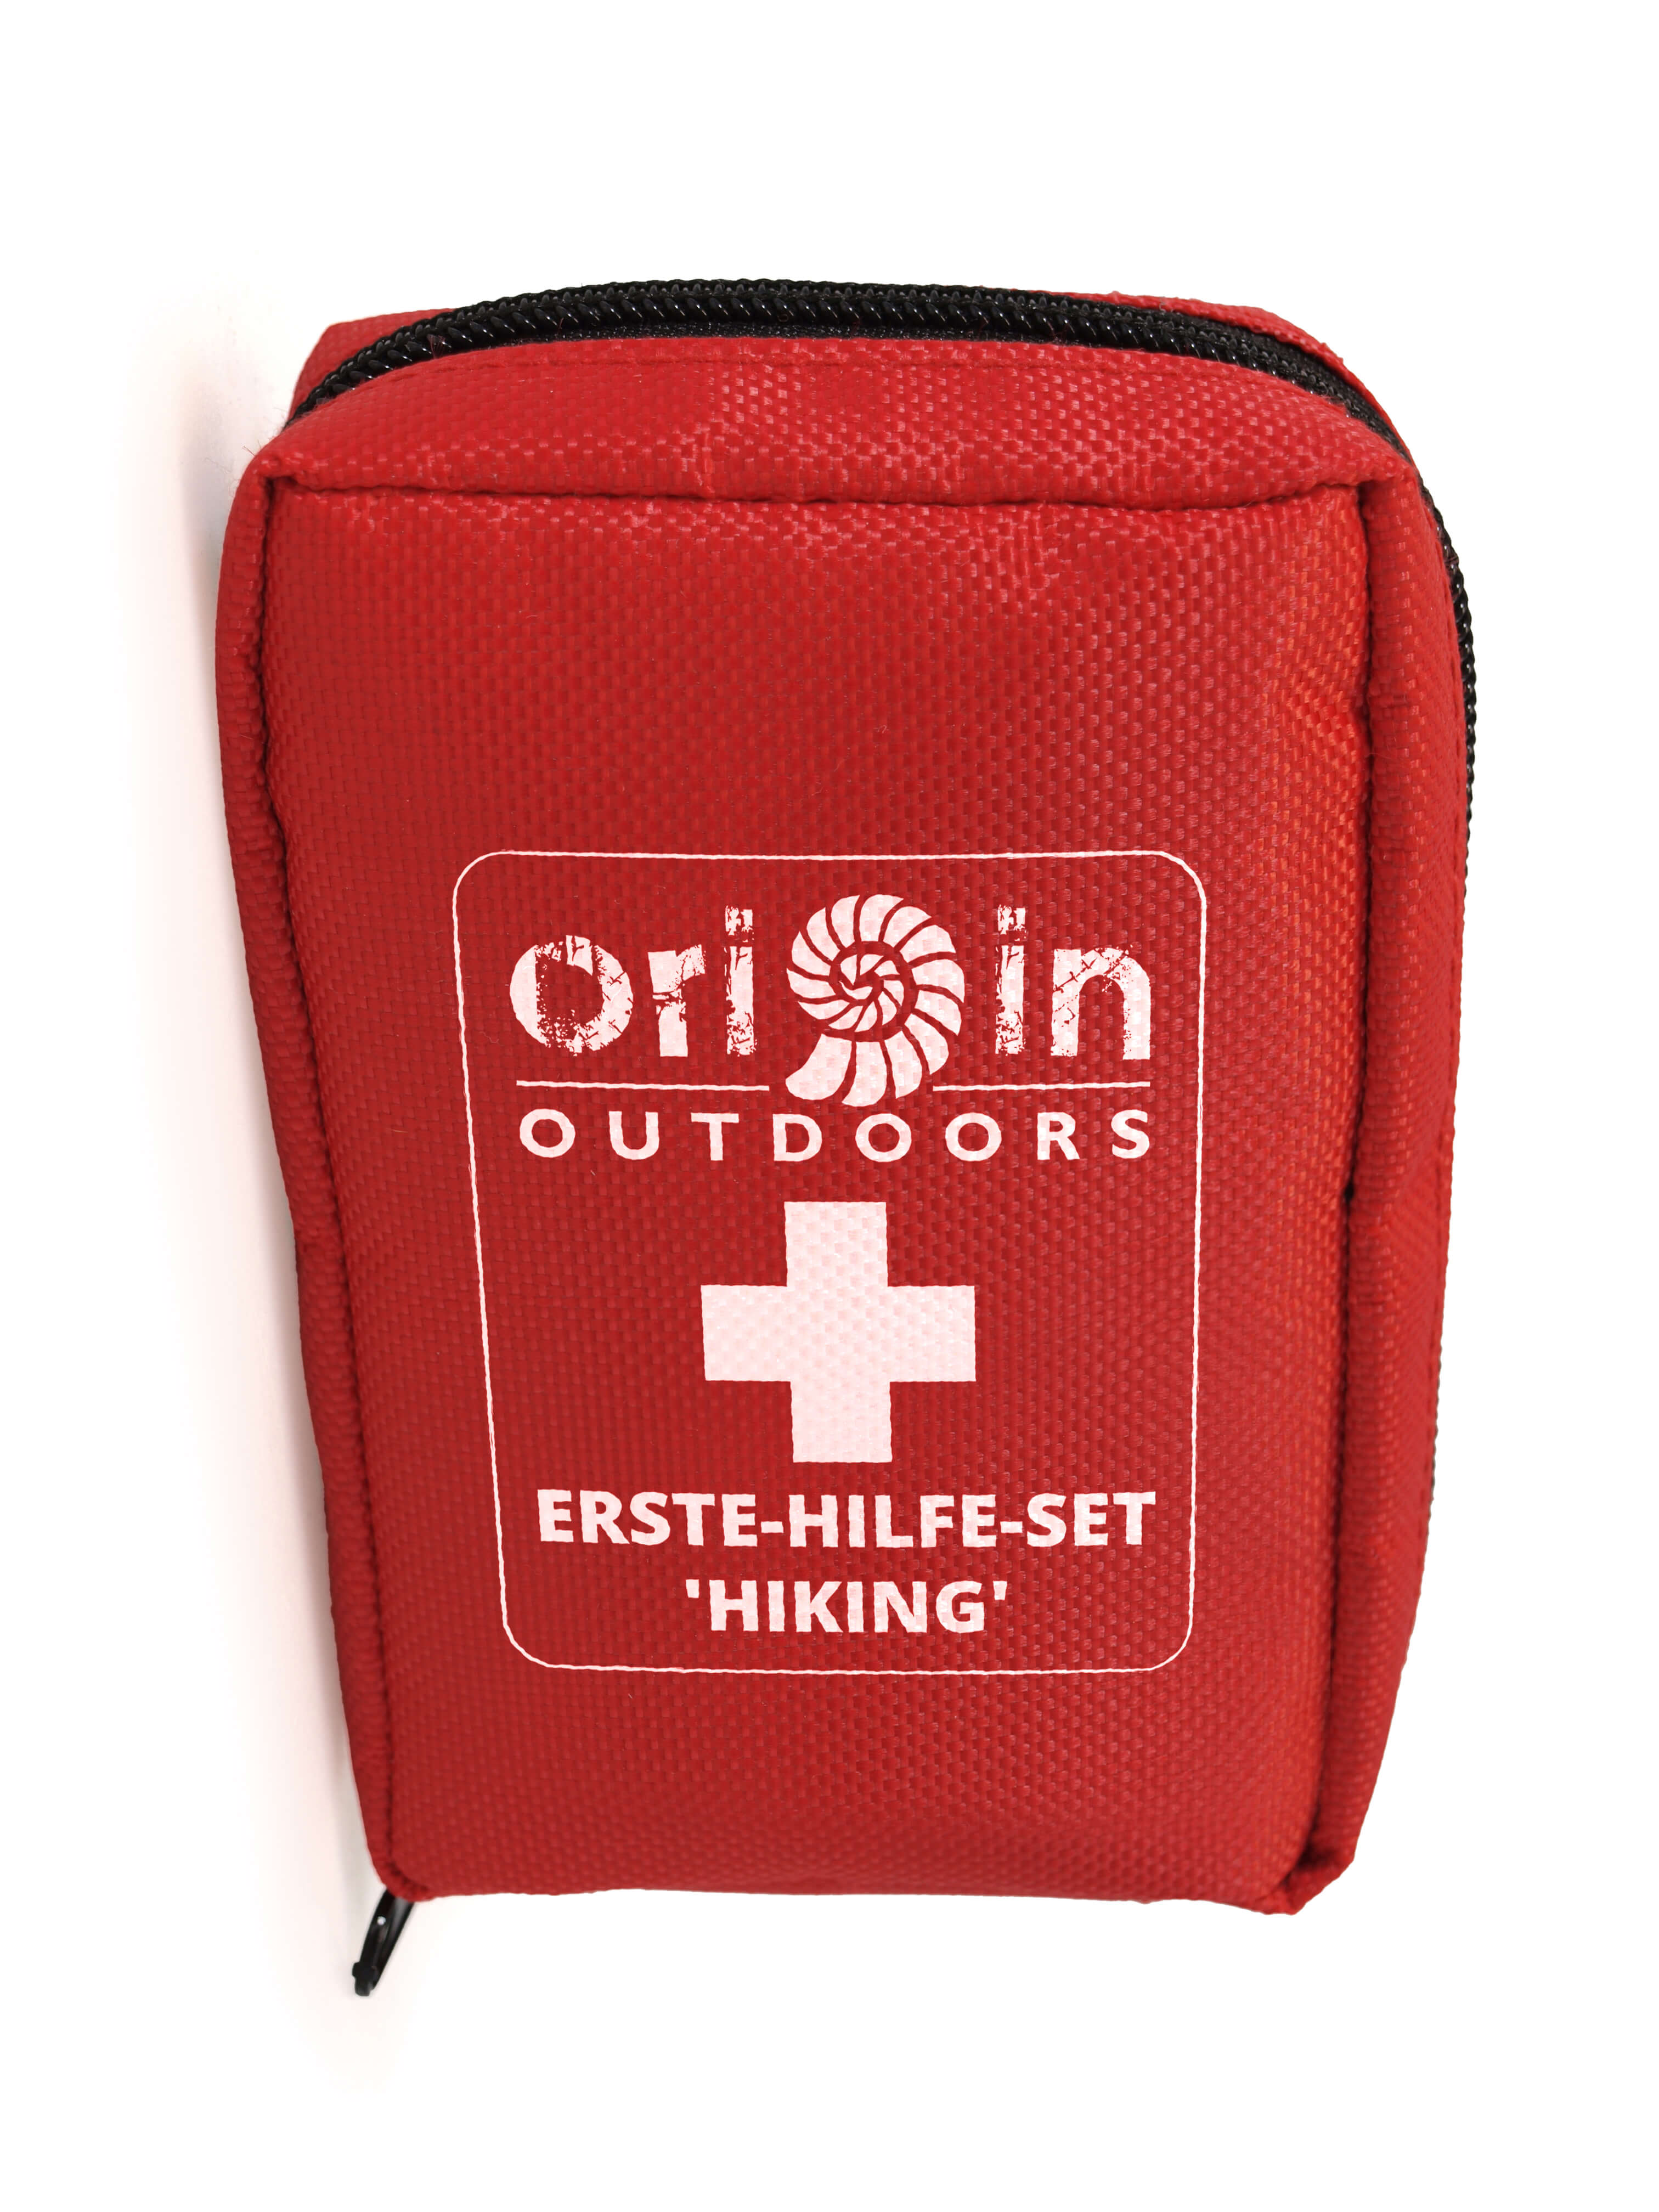 Origin Outdoors First Aid Kit Hiking